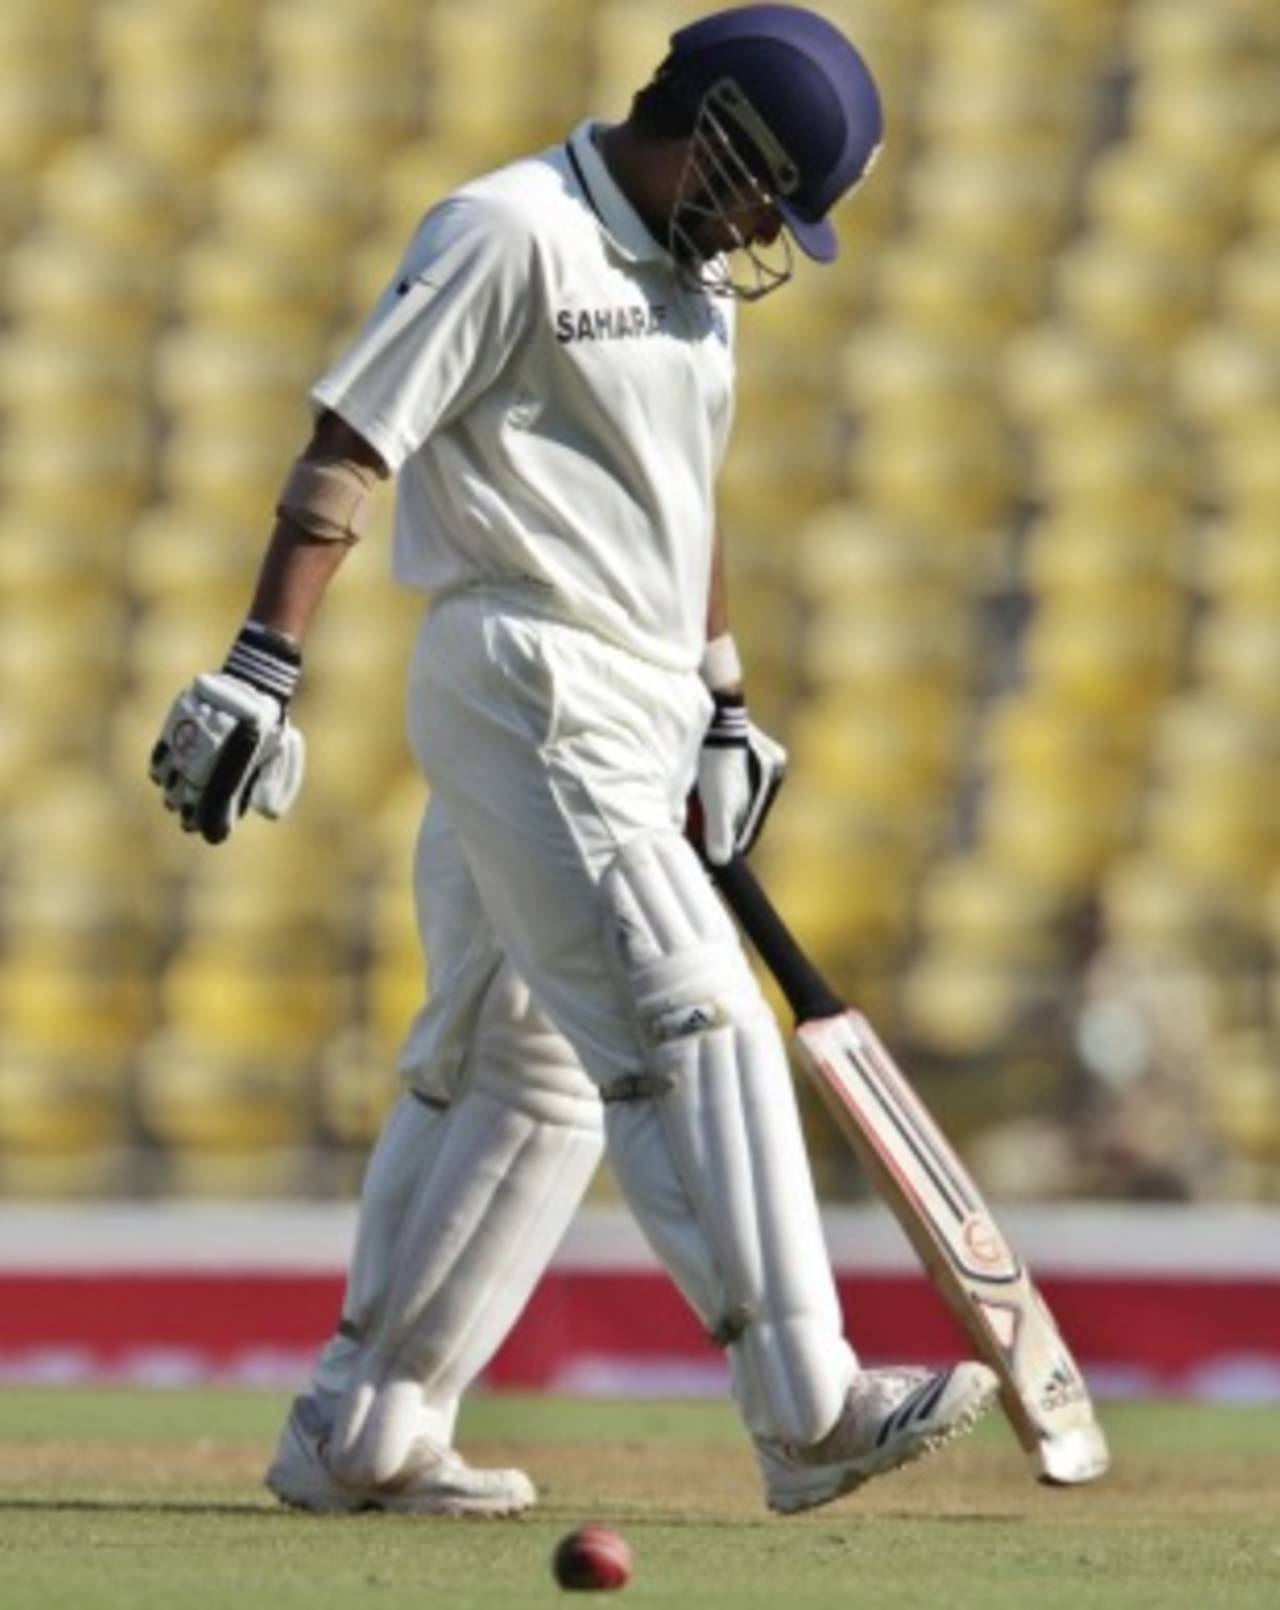 Sachin Tendulkar's wait for Test century No. 50 continued, India v New Zealand, 3rd Test, Nagpur, 3rd day, November 22, 2010